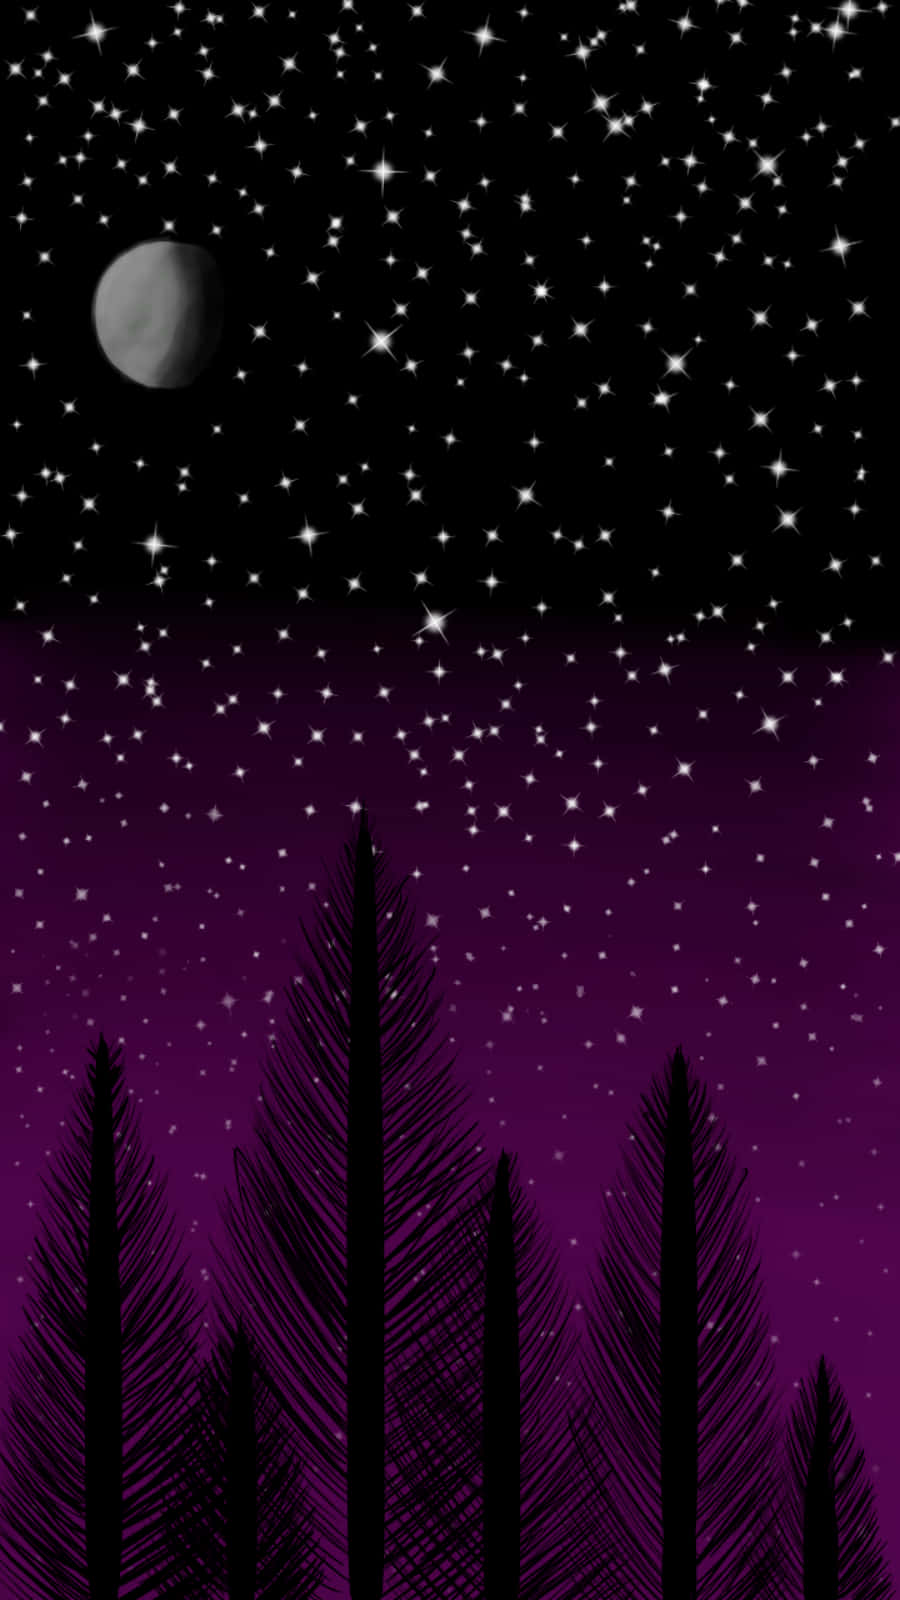 Asocialnatthimmel Med Trädhorisont - Asexual Night Sky With Tree Silhouette Wallpaper